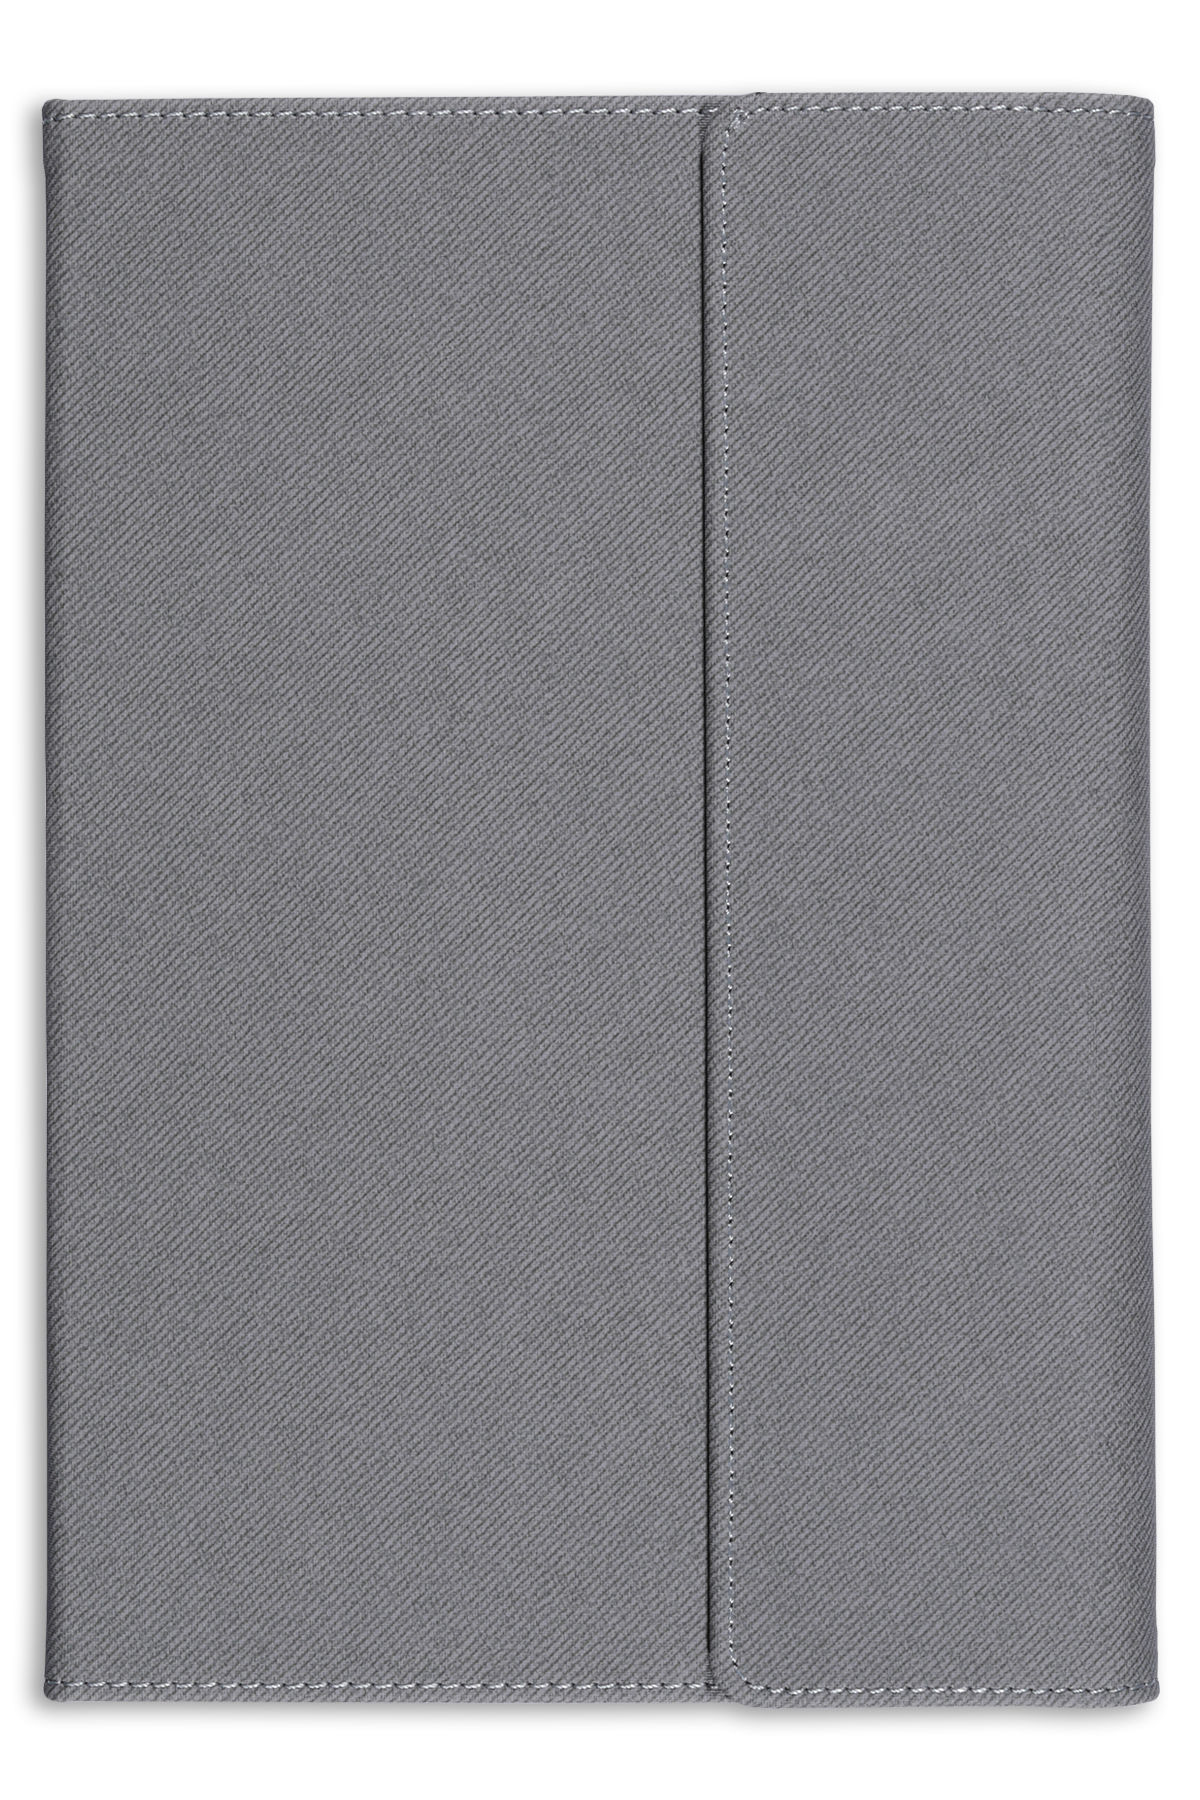 Matt Notebook A5 15x22 Mıknatıslı Kapak Defter Çizgili Gri